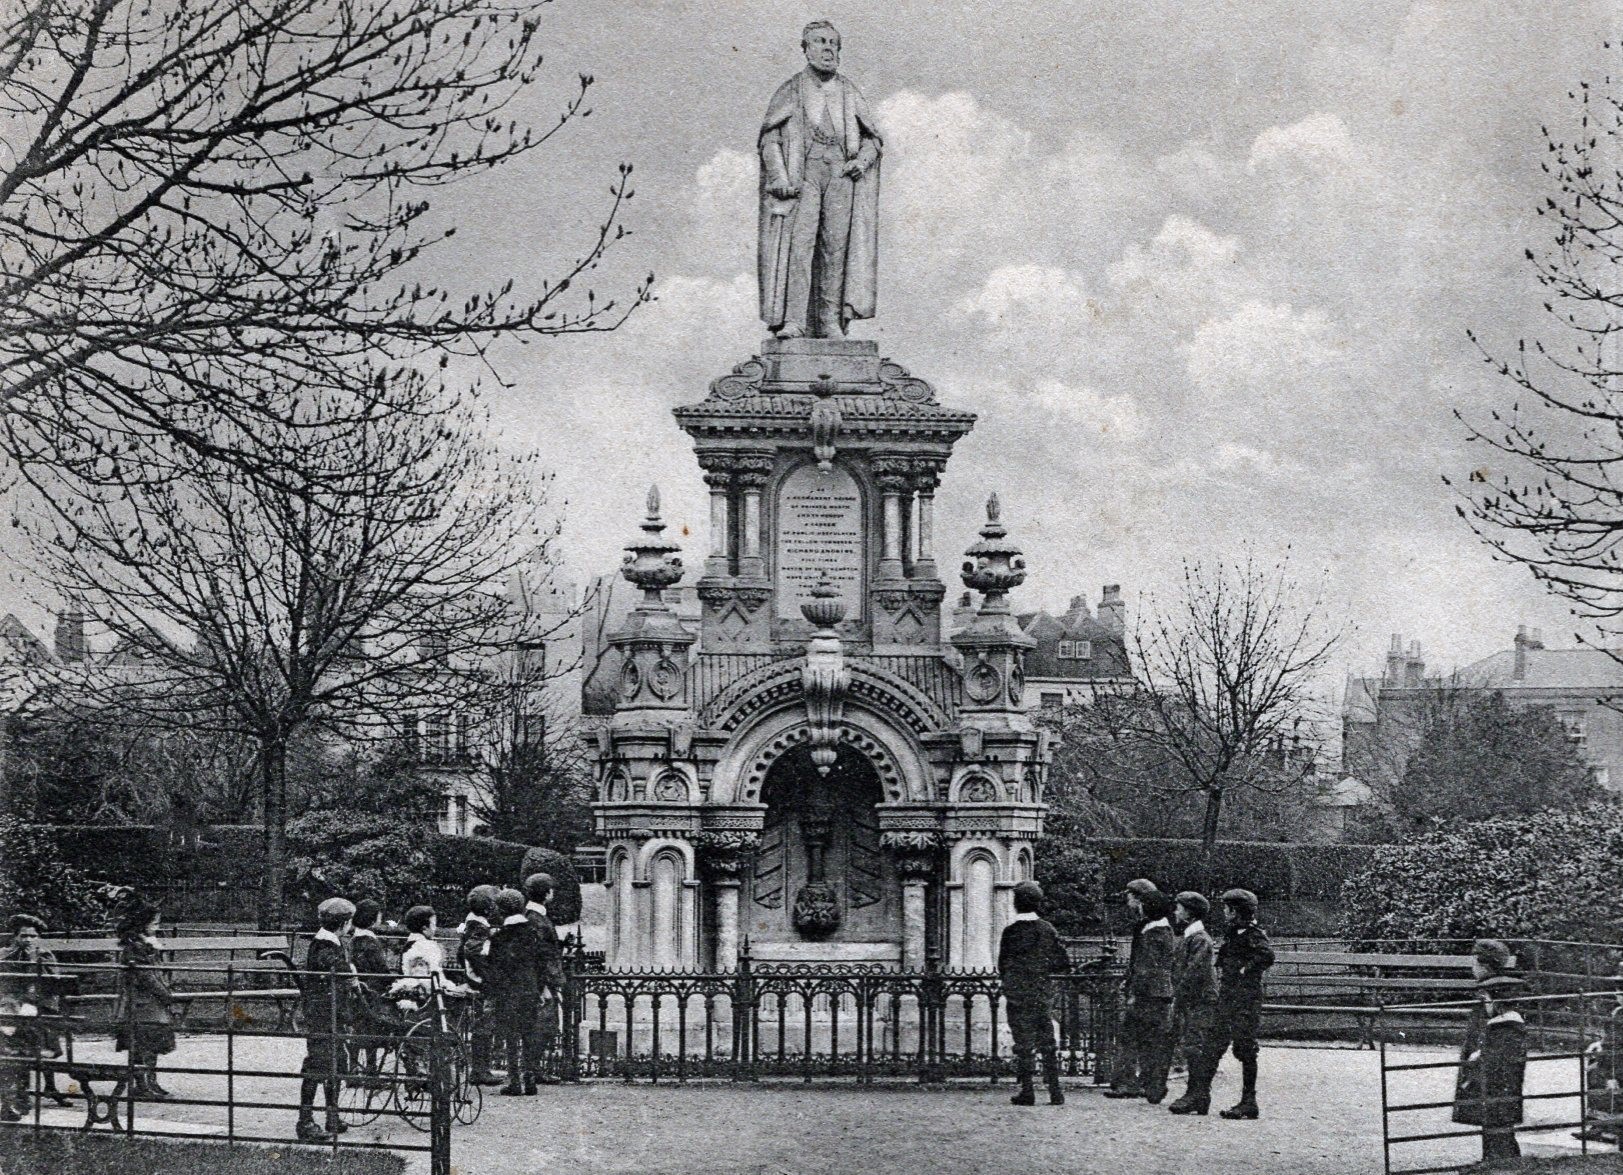 Andrews statue on its original plinth.